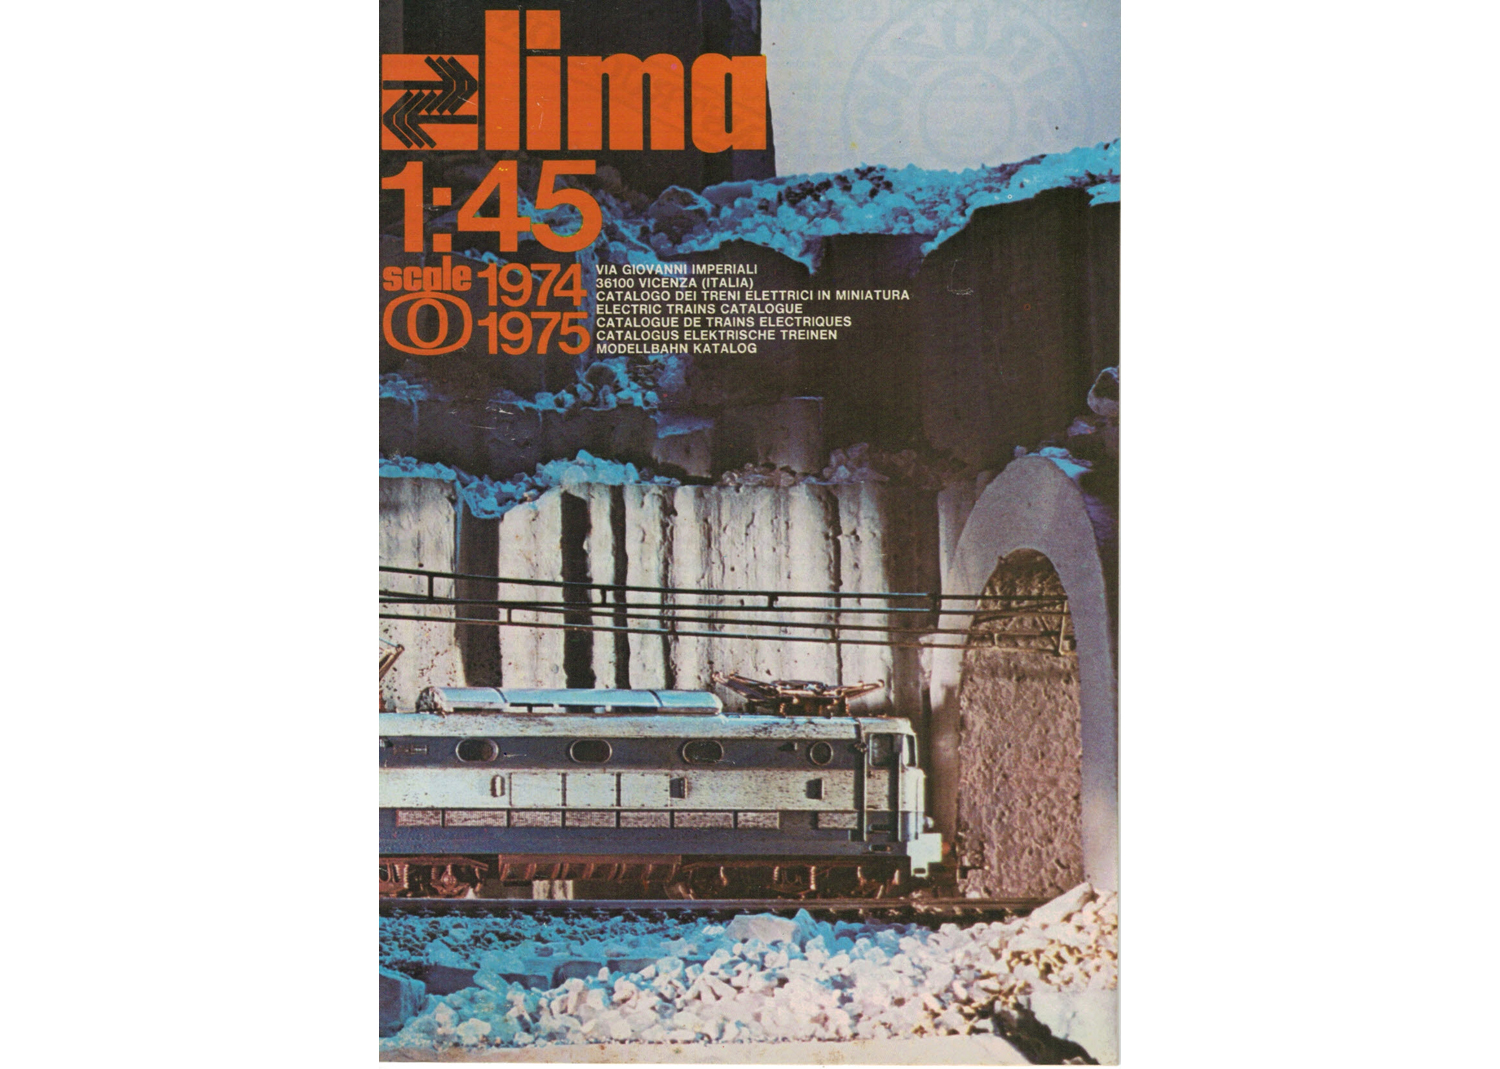 Lima Haupkatalog Spur 0 1974-1975